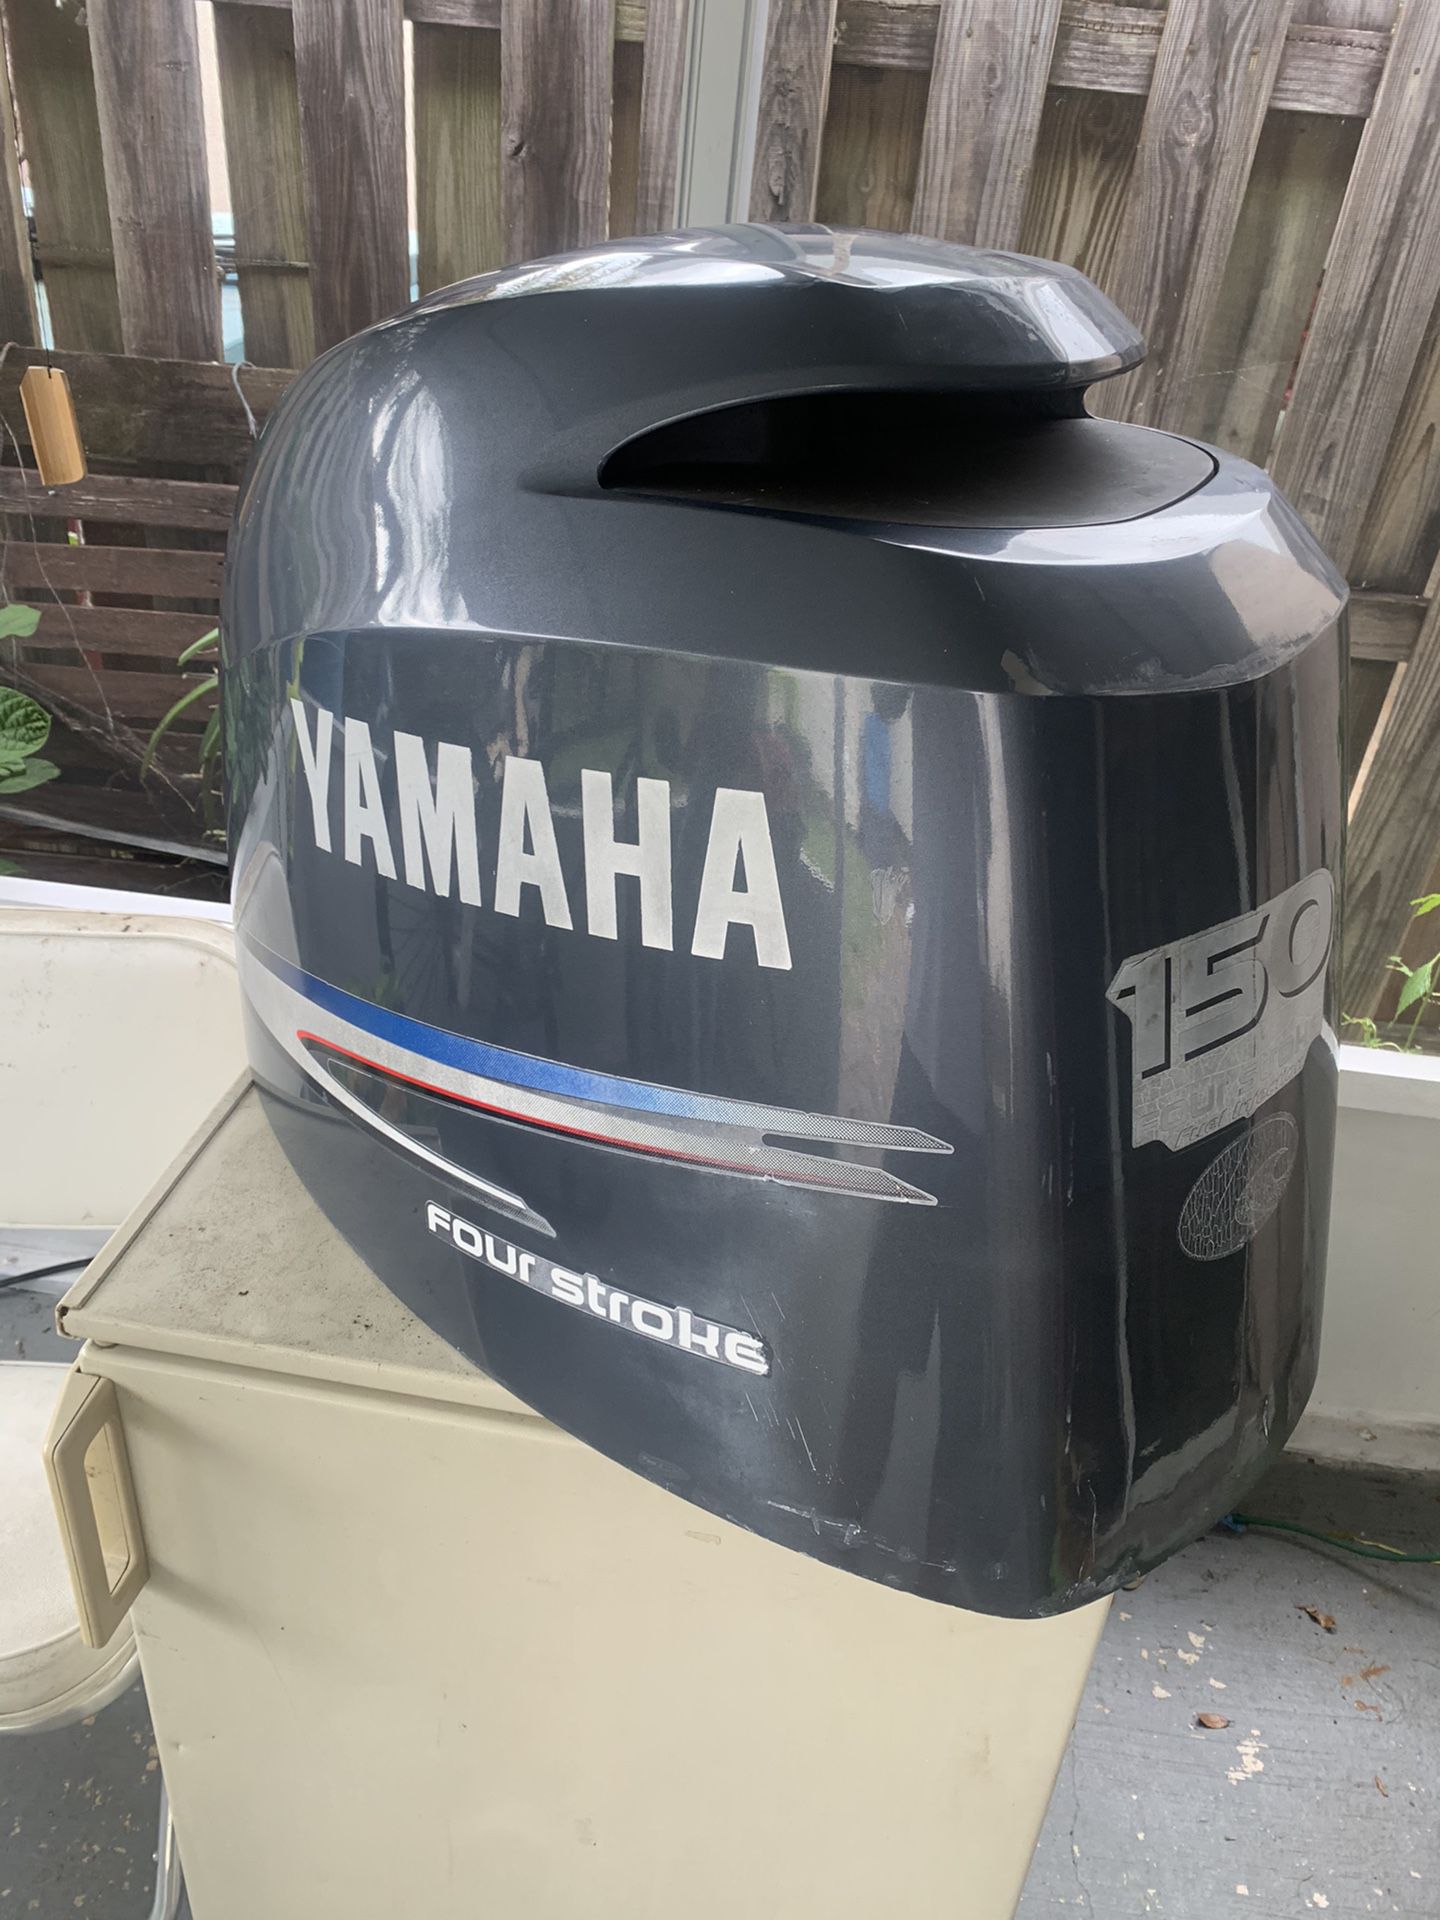 Yamaha 150 cowling